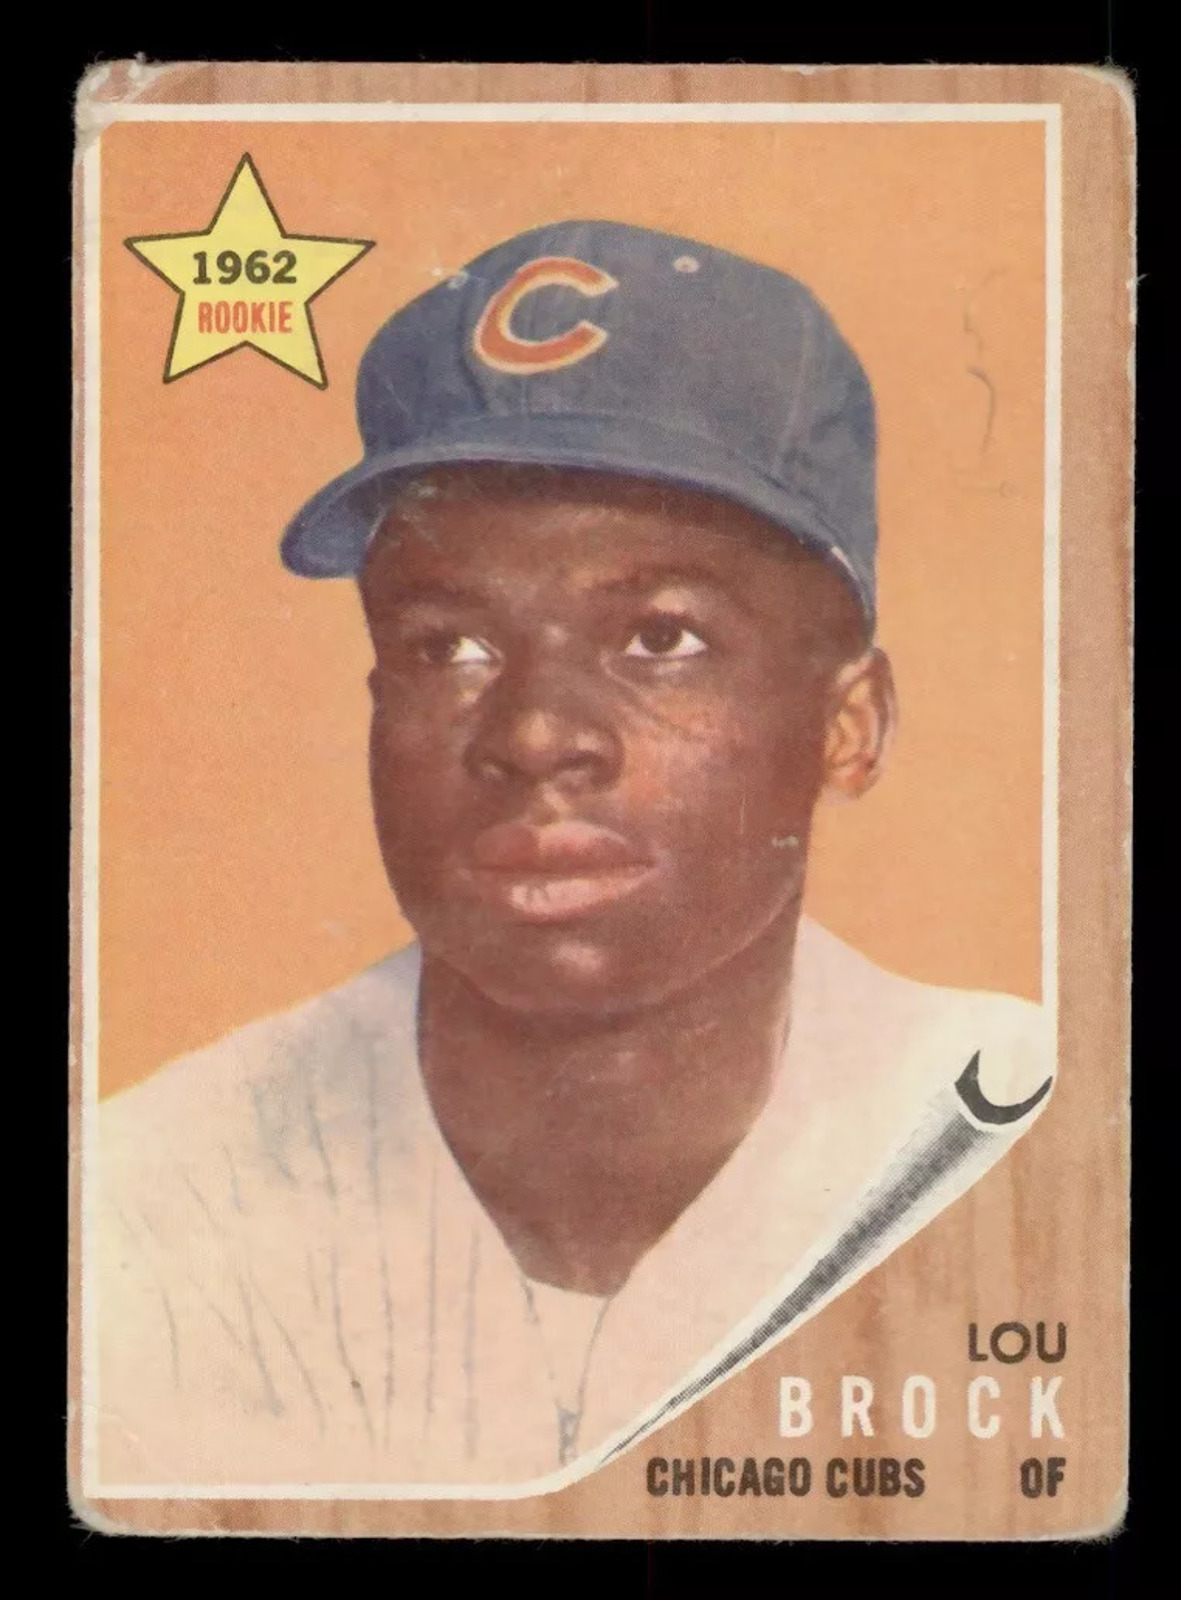 1962 Topps Lou Brock rookie card